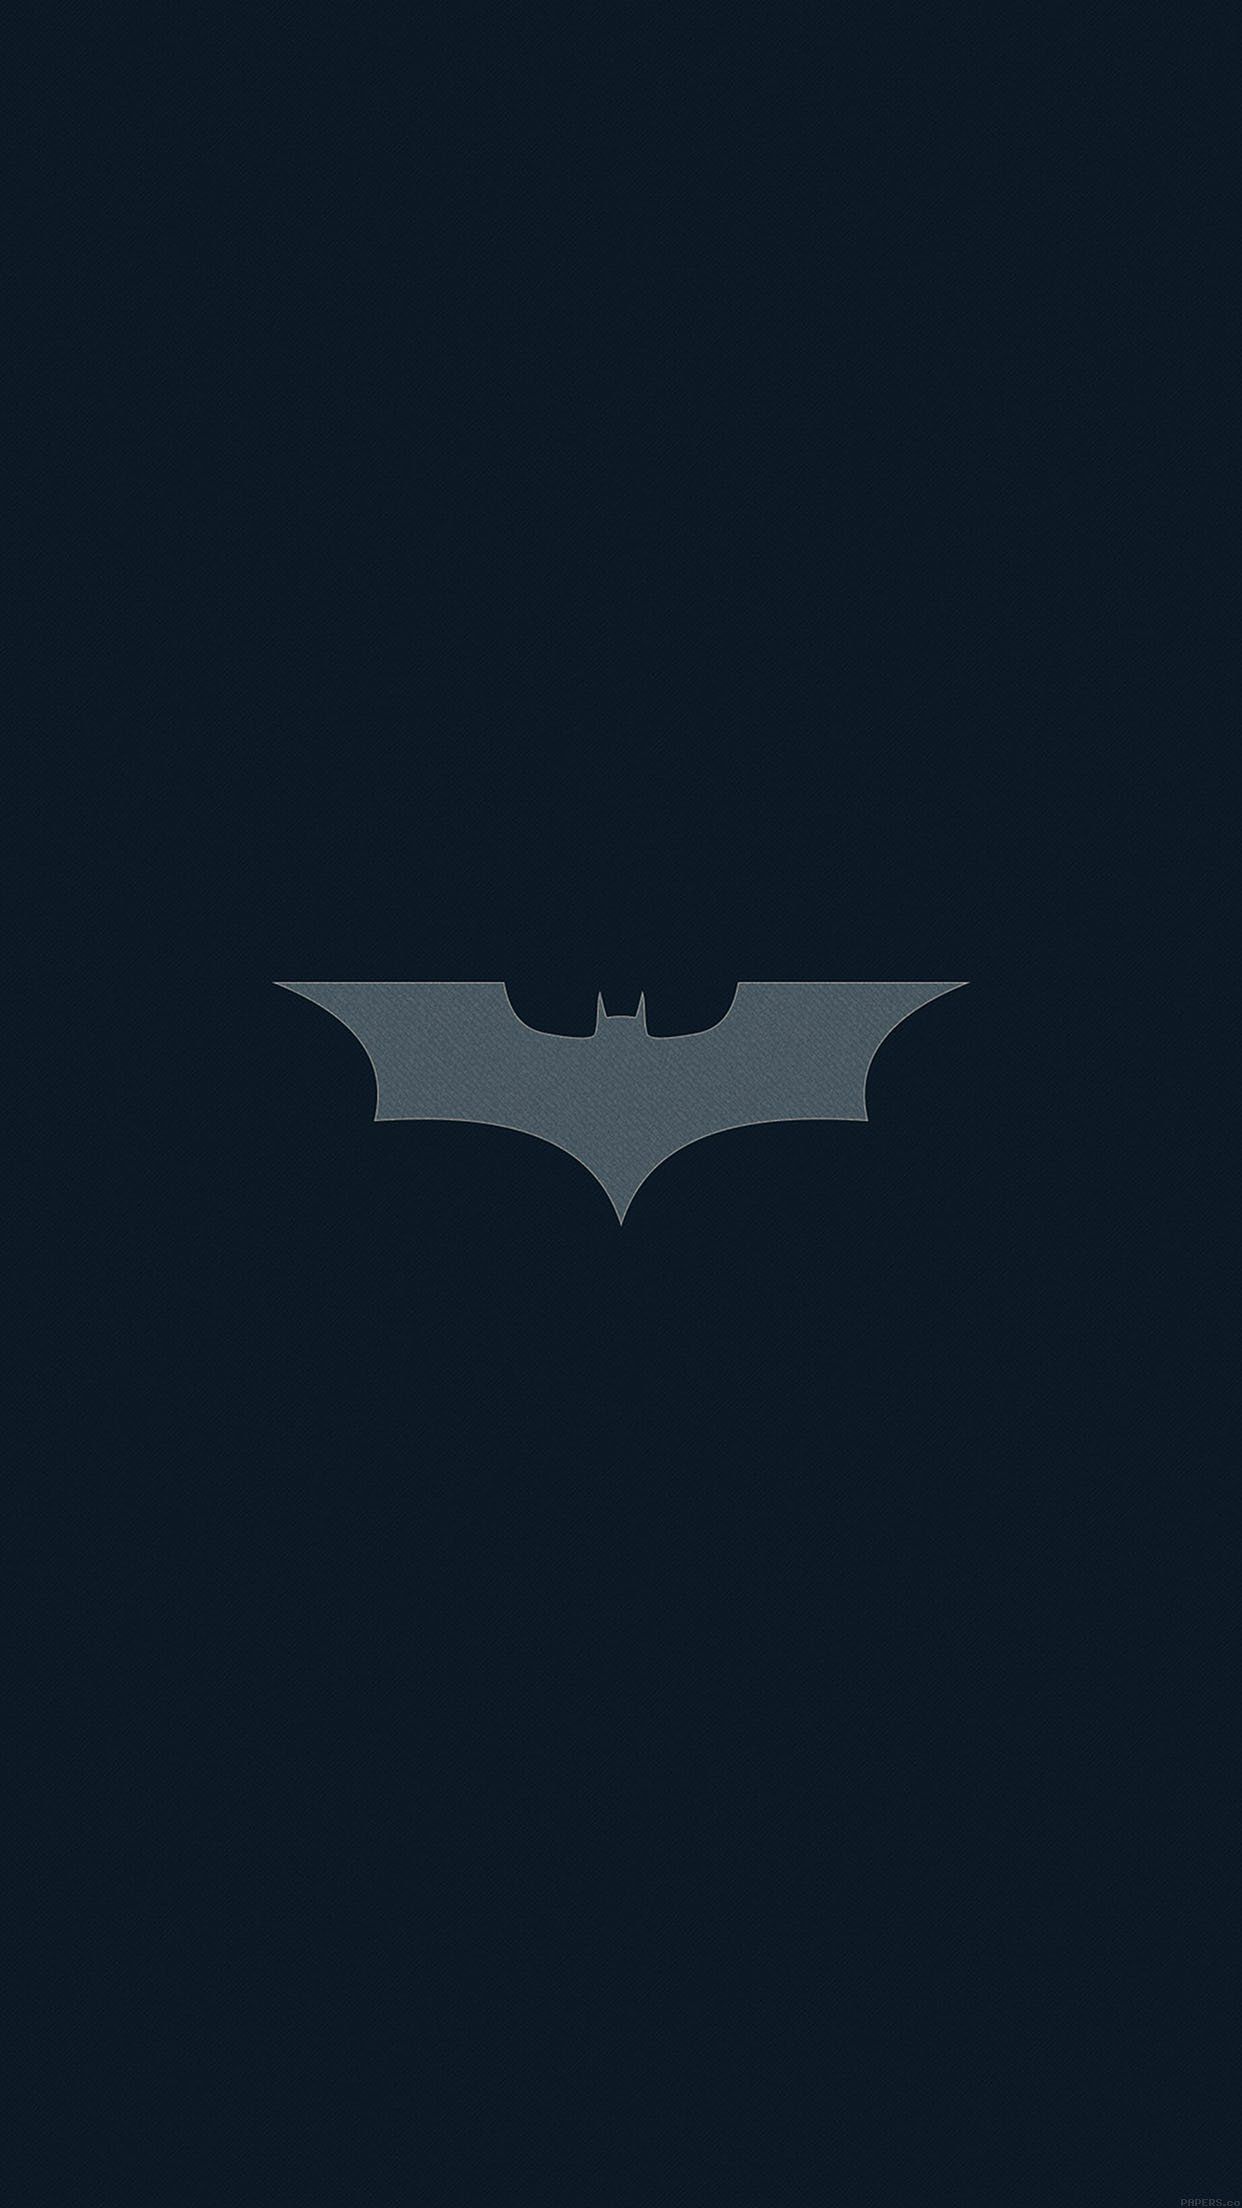 Batman Logo 4k iPhone Wallpapers - Wallpaper Cave